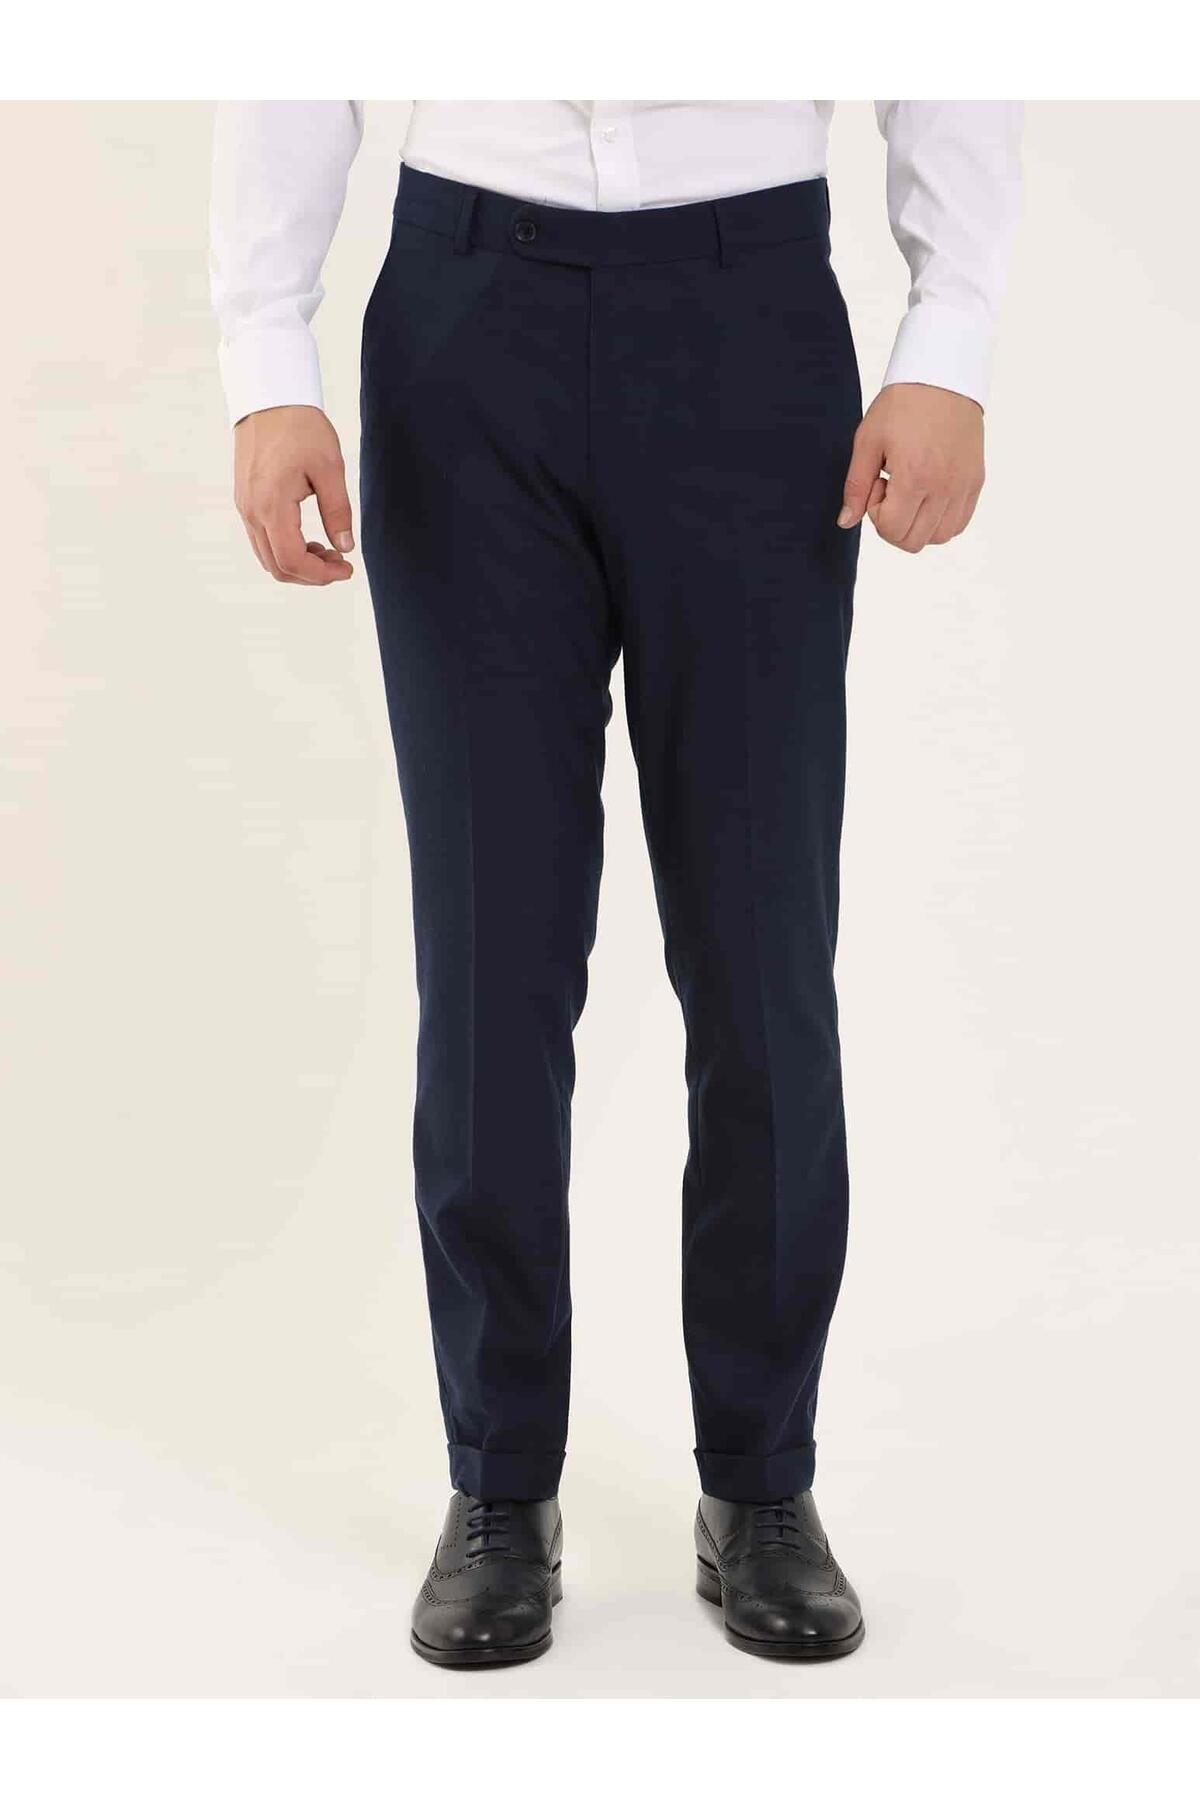 Dufy Lacivert Erkek Regular Fit Düz Klasik Pantolon - 97725